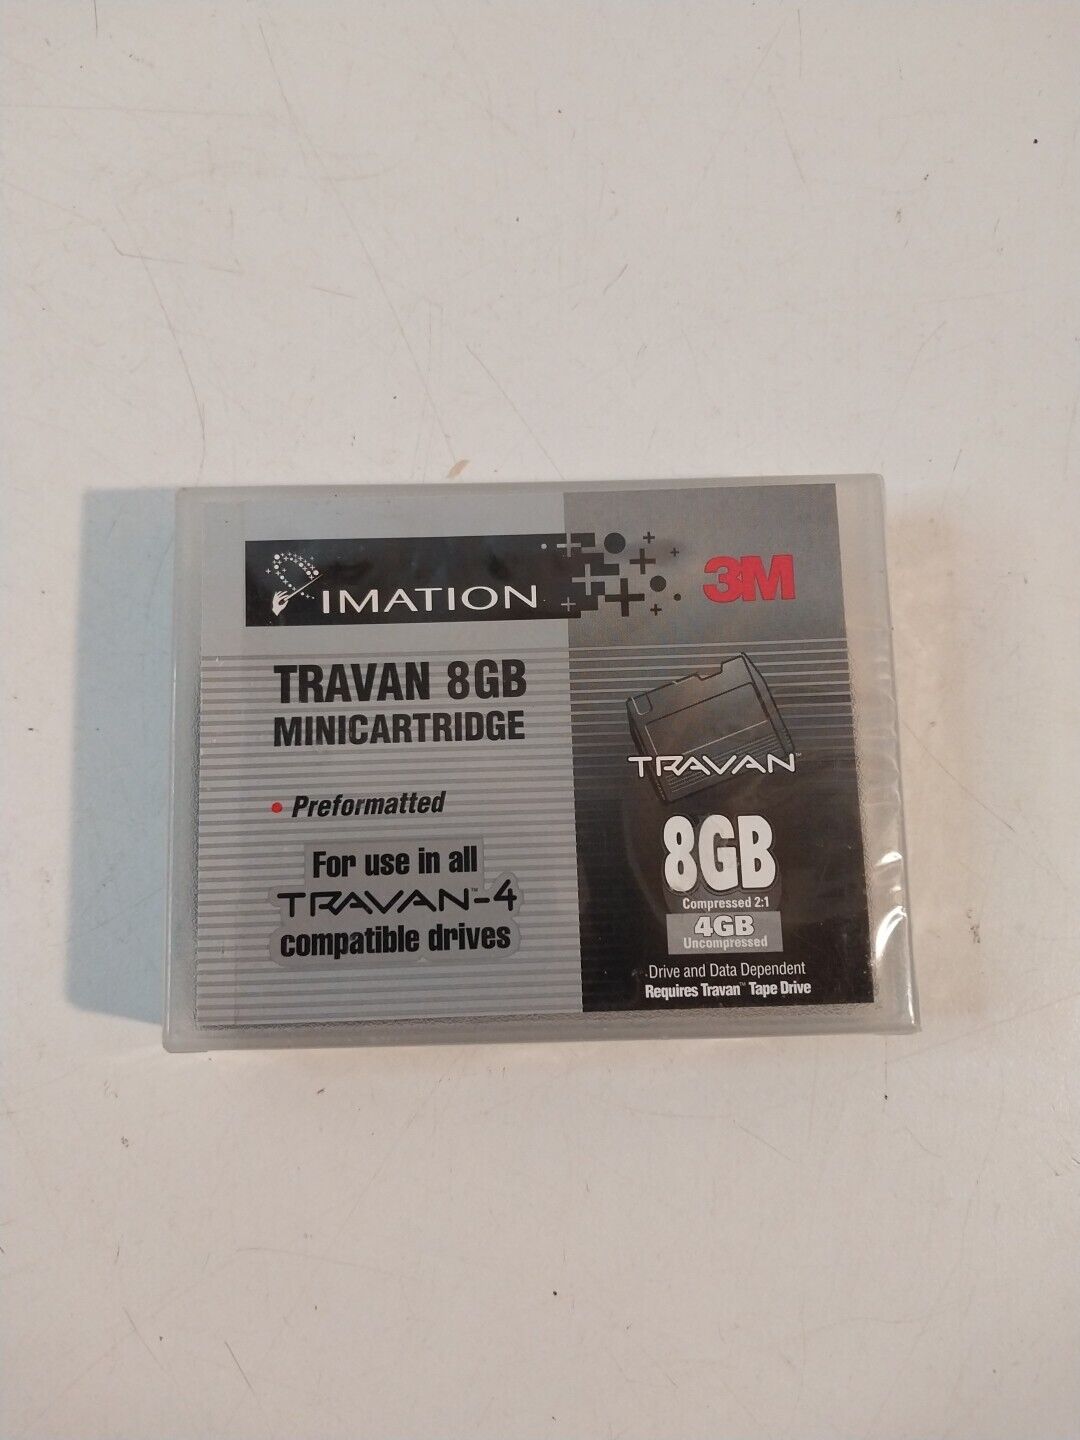 Imation 3M Travan Preformatted Minicartridge 8GB Compressed Travan-4 Tape Drive